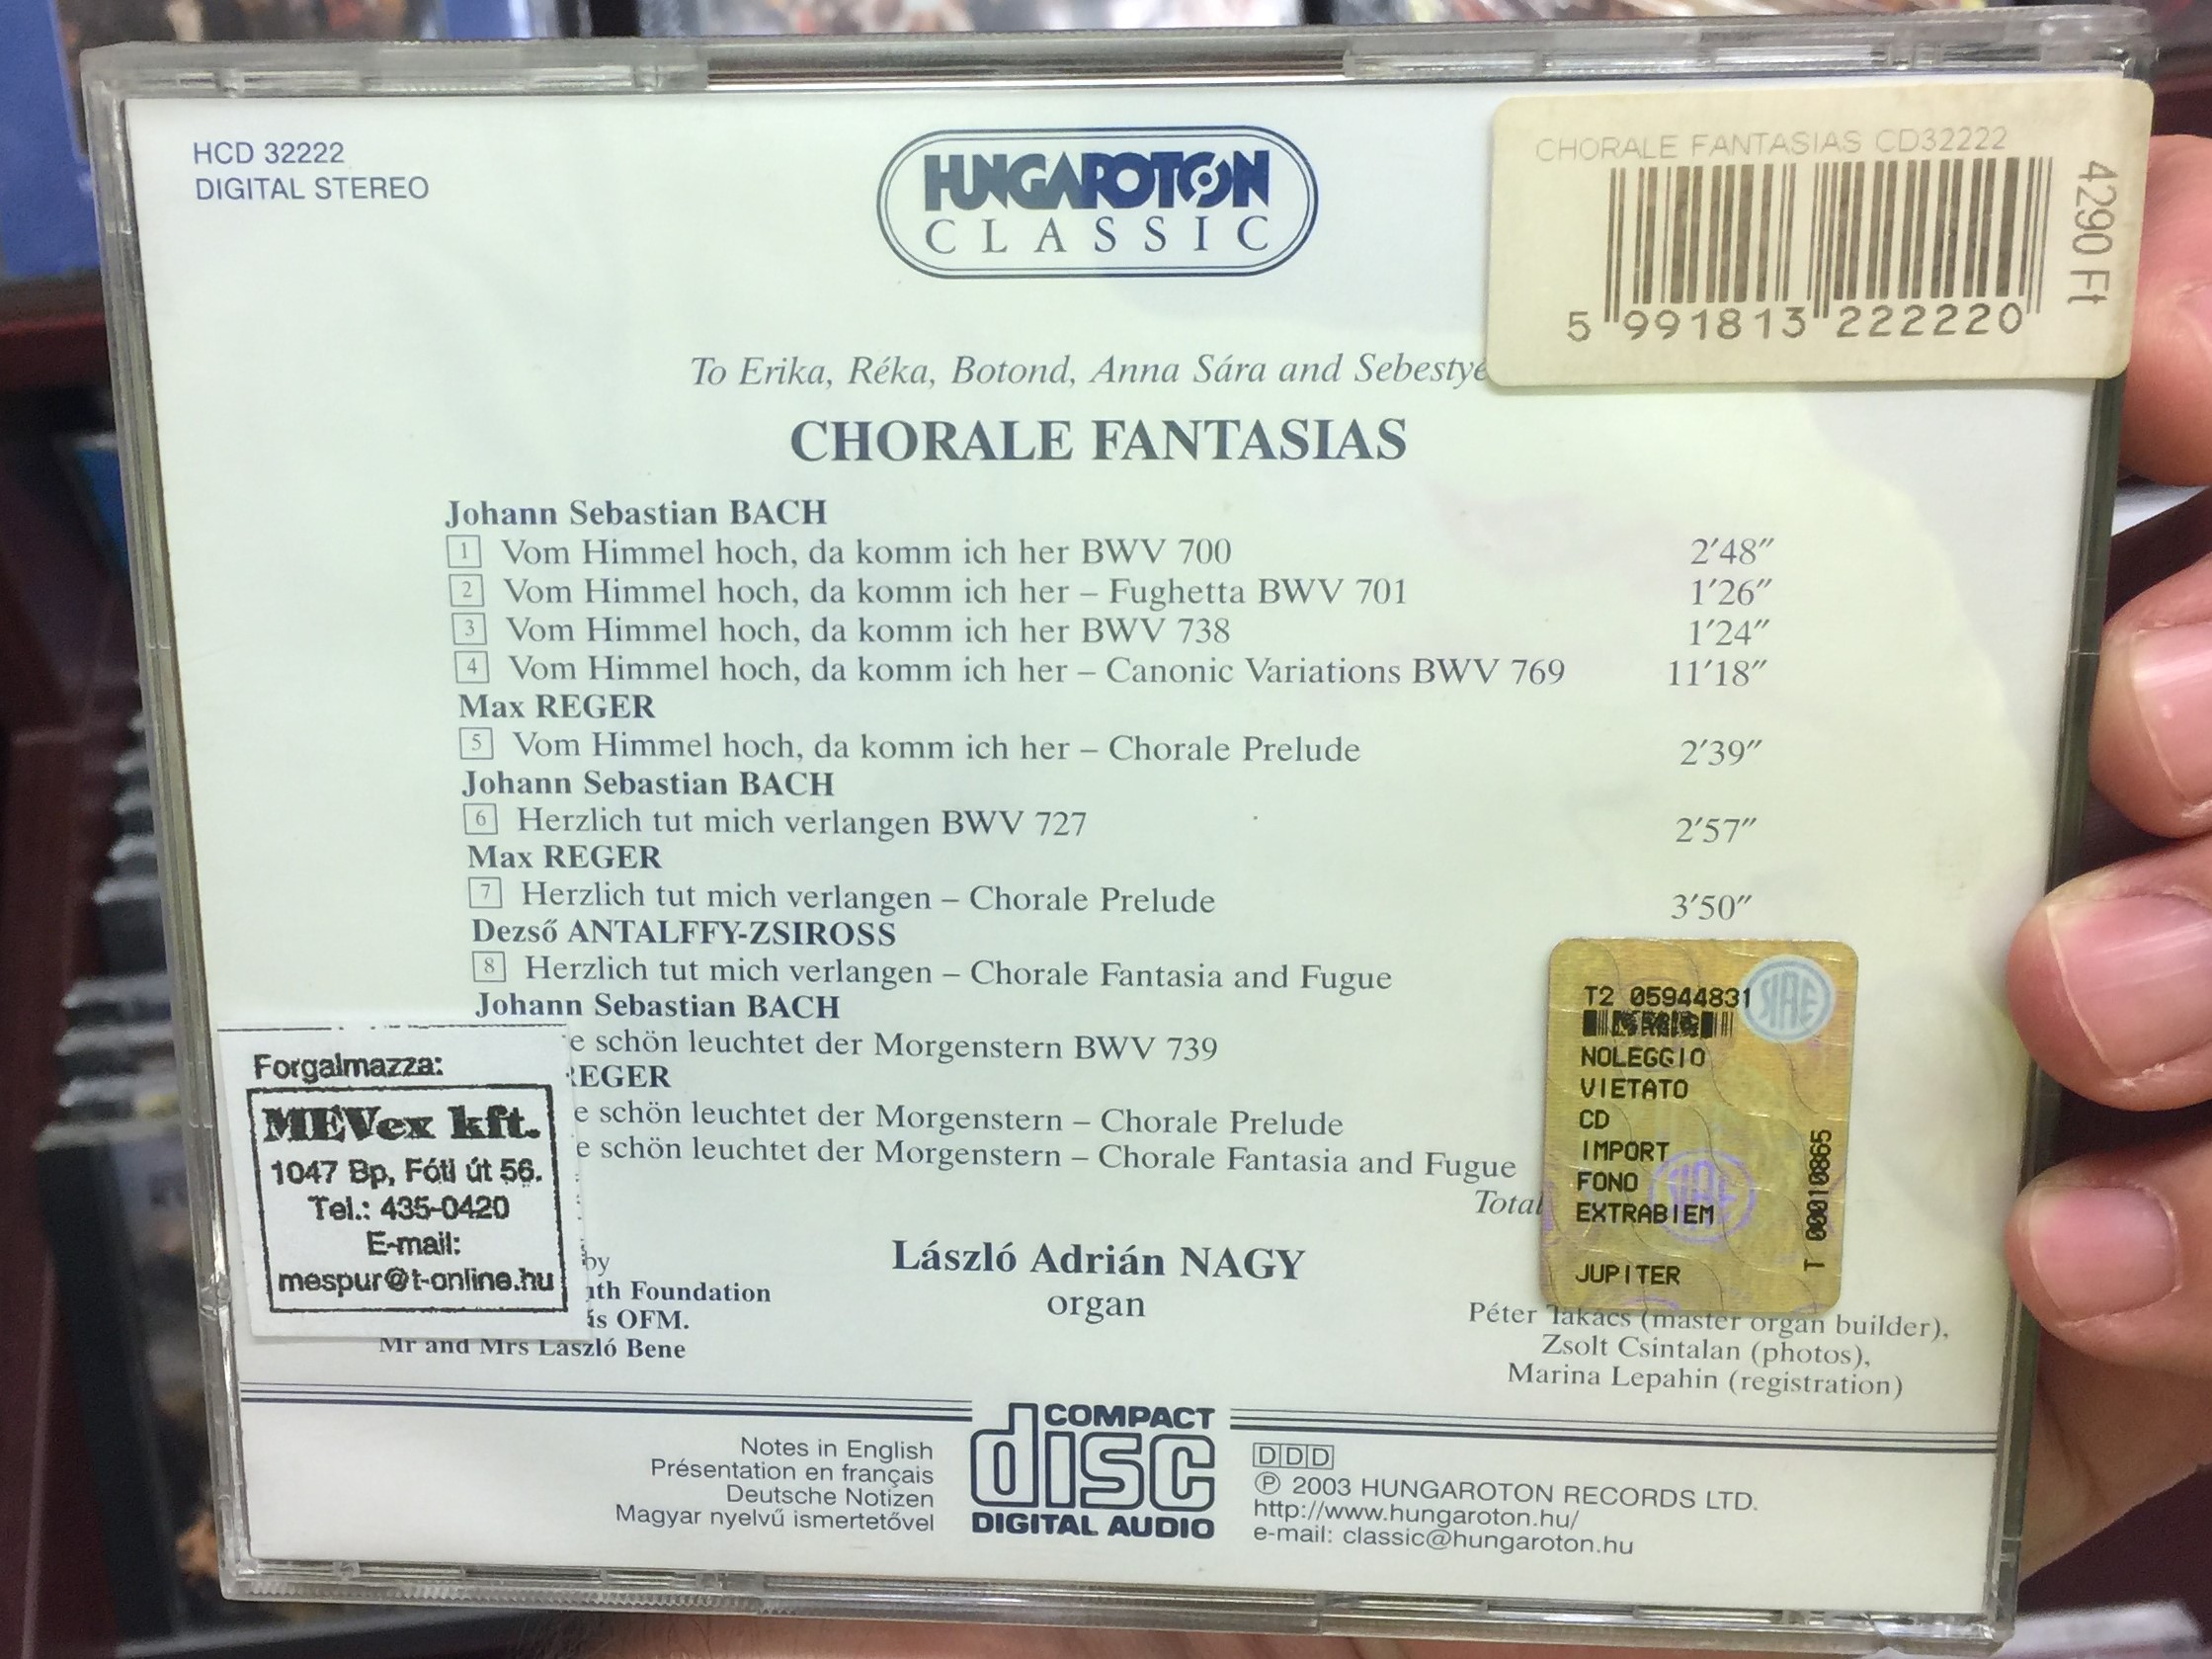 -chorale-fantasias-johan-sebastian-bach-max-reger-dezso-antalffy-zsiross-laszlo-adrian-nagy-organ-hungaroton-classic-audio-cd-2003-stereo-hcd-32222-2-.jpg